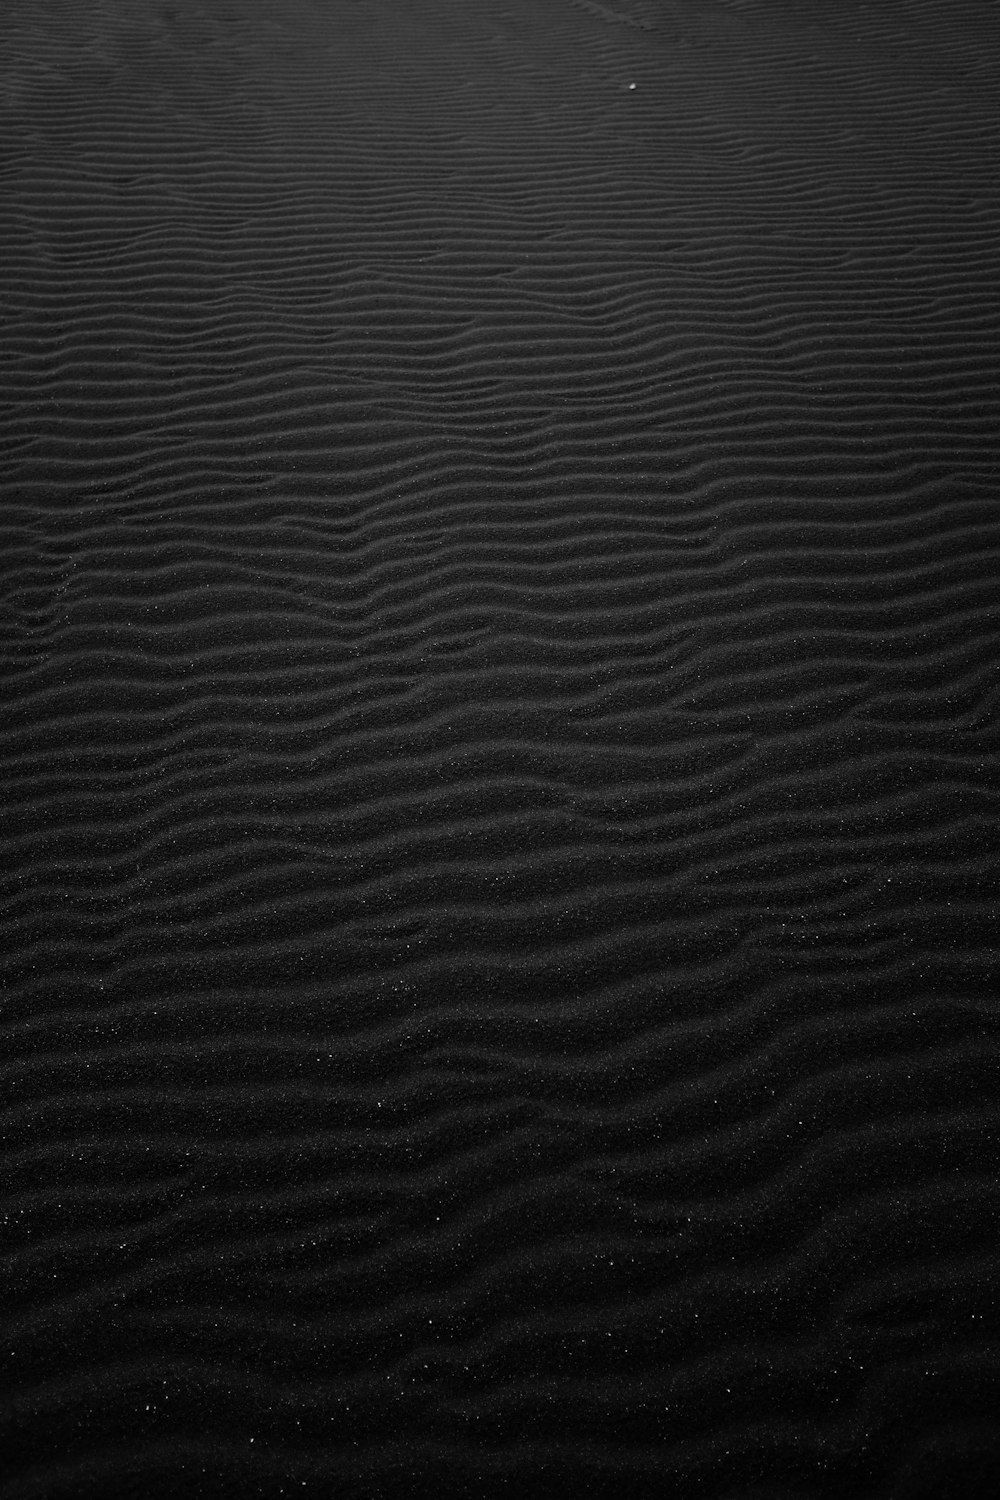 Best Black Sand Pictures [HD] | Download Free Images on Unsplash